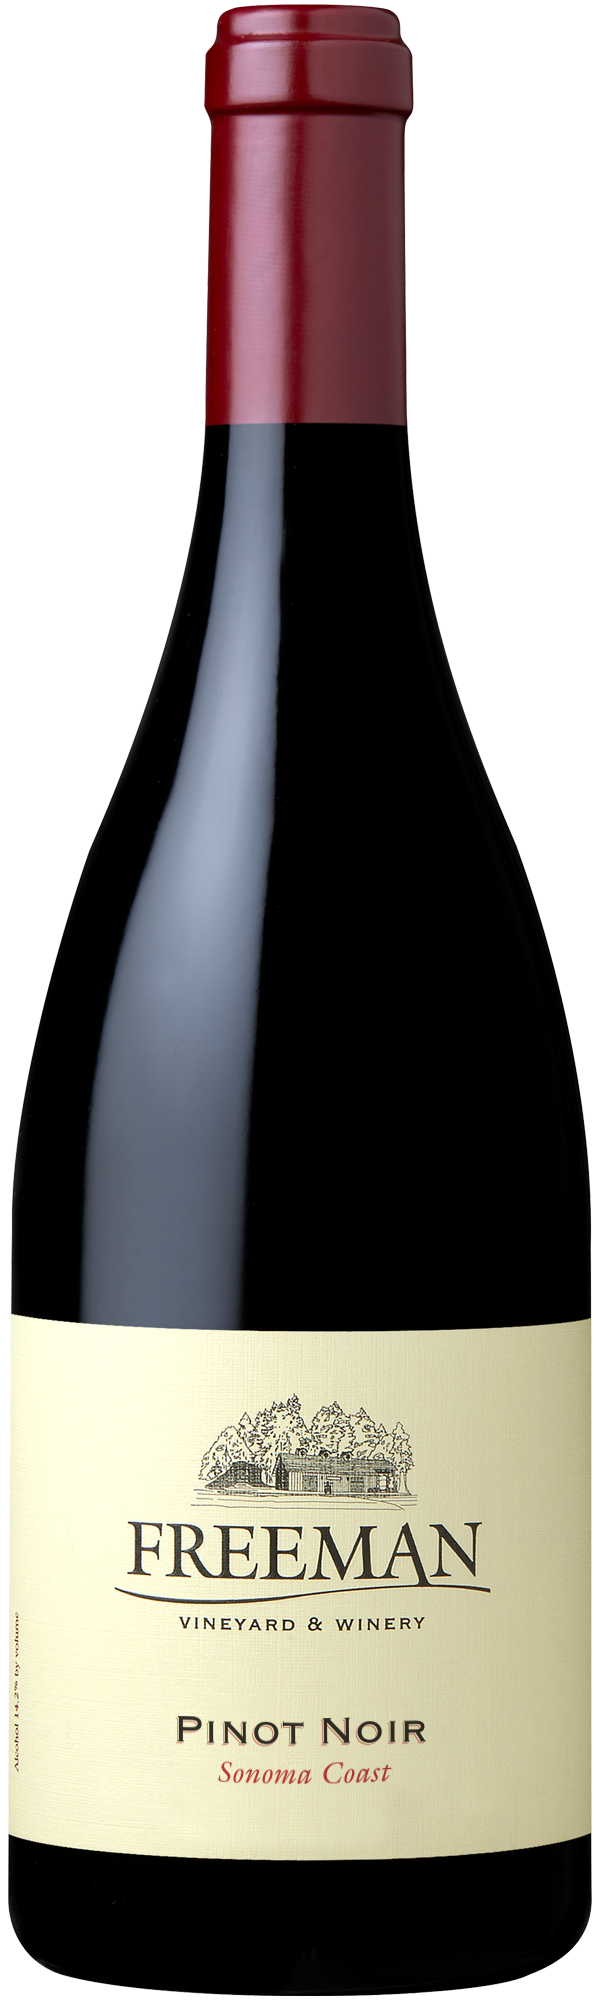 Sonoma Coast Pinot Noir bottle shot